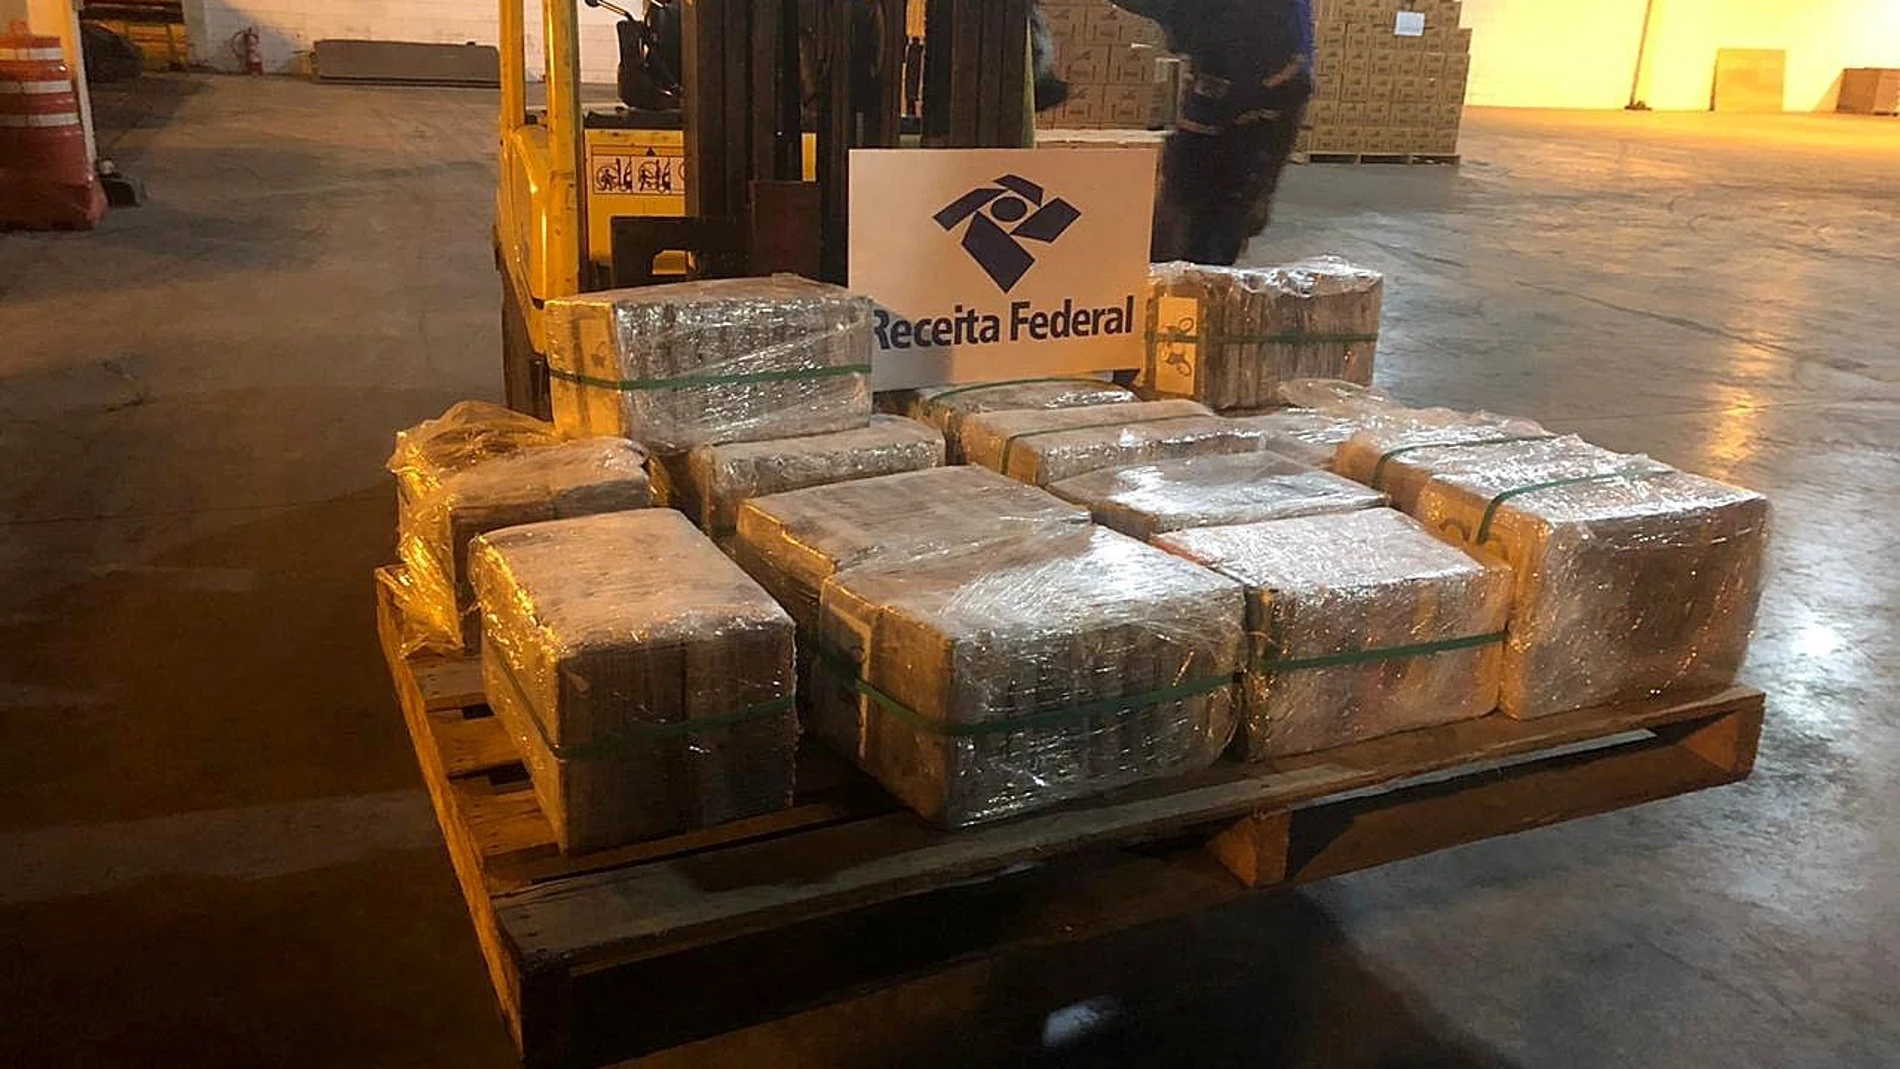 Aprehenden 300 kilos de cocaína en el puerto de Río con destino a España